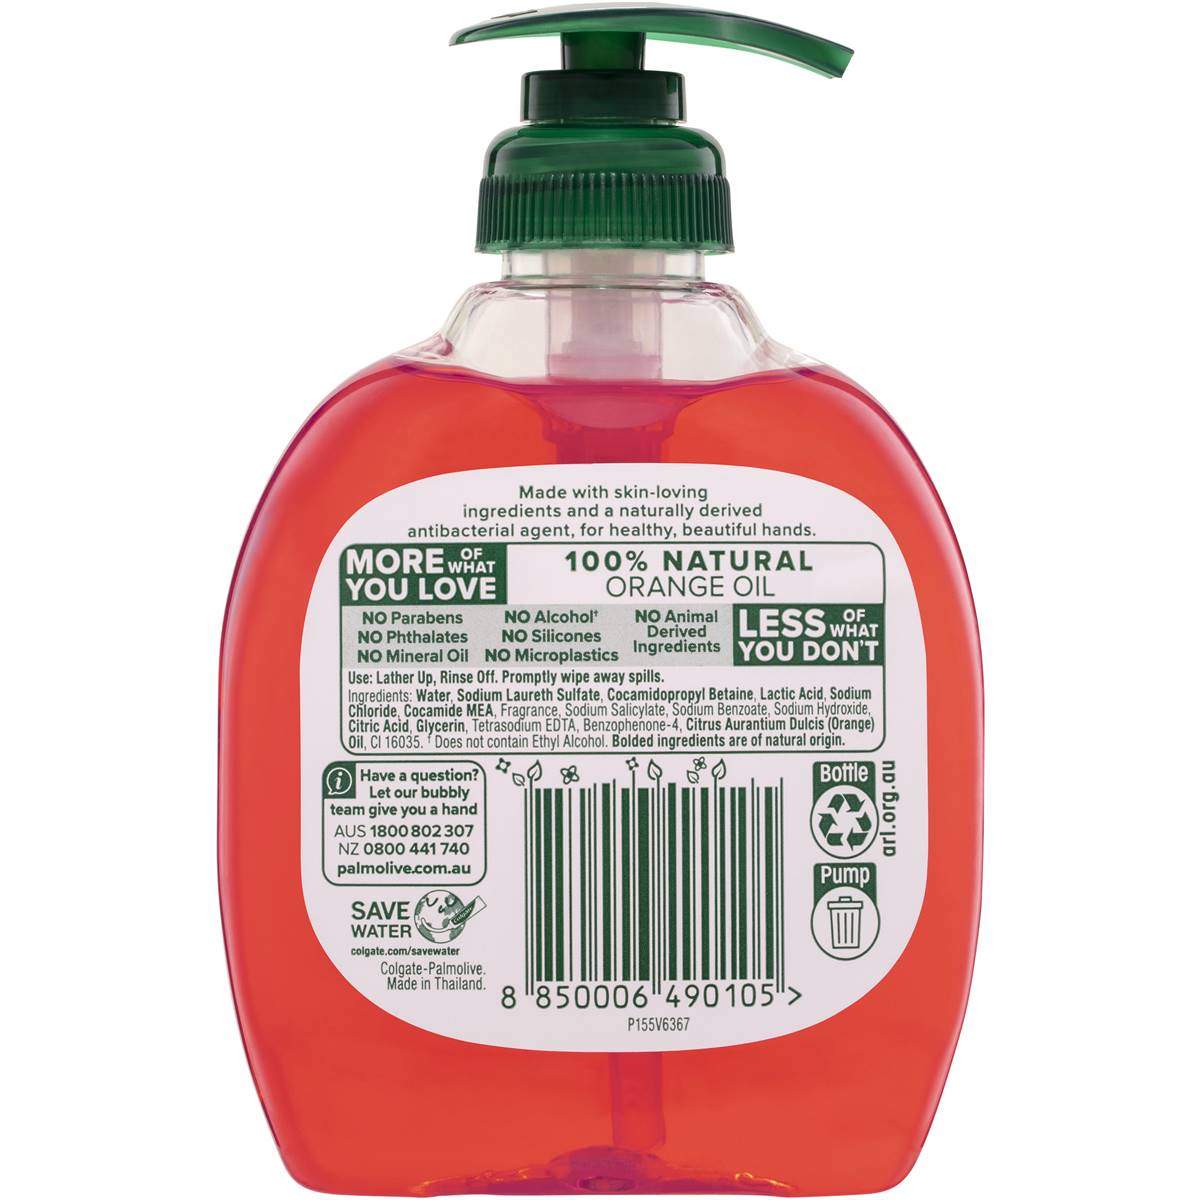 Palmolive Liquid Hand Wash Antibacterial Orange 250ml